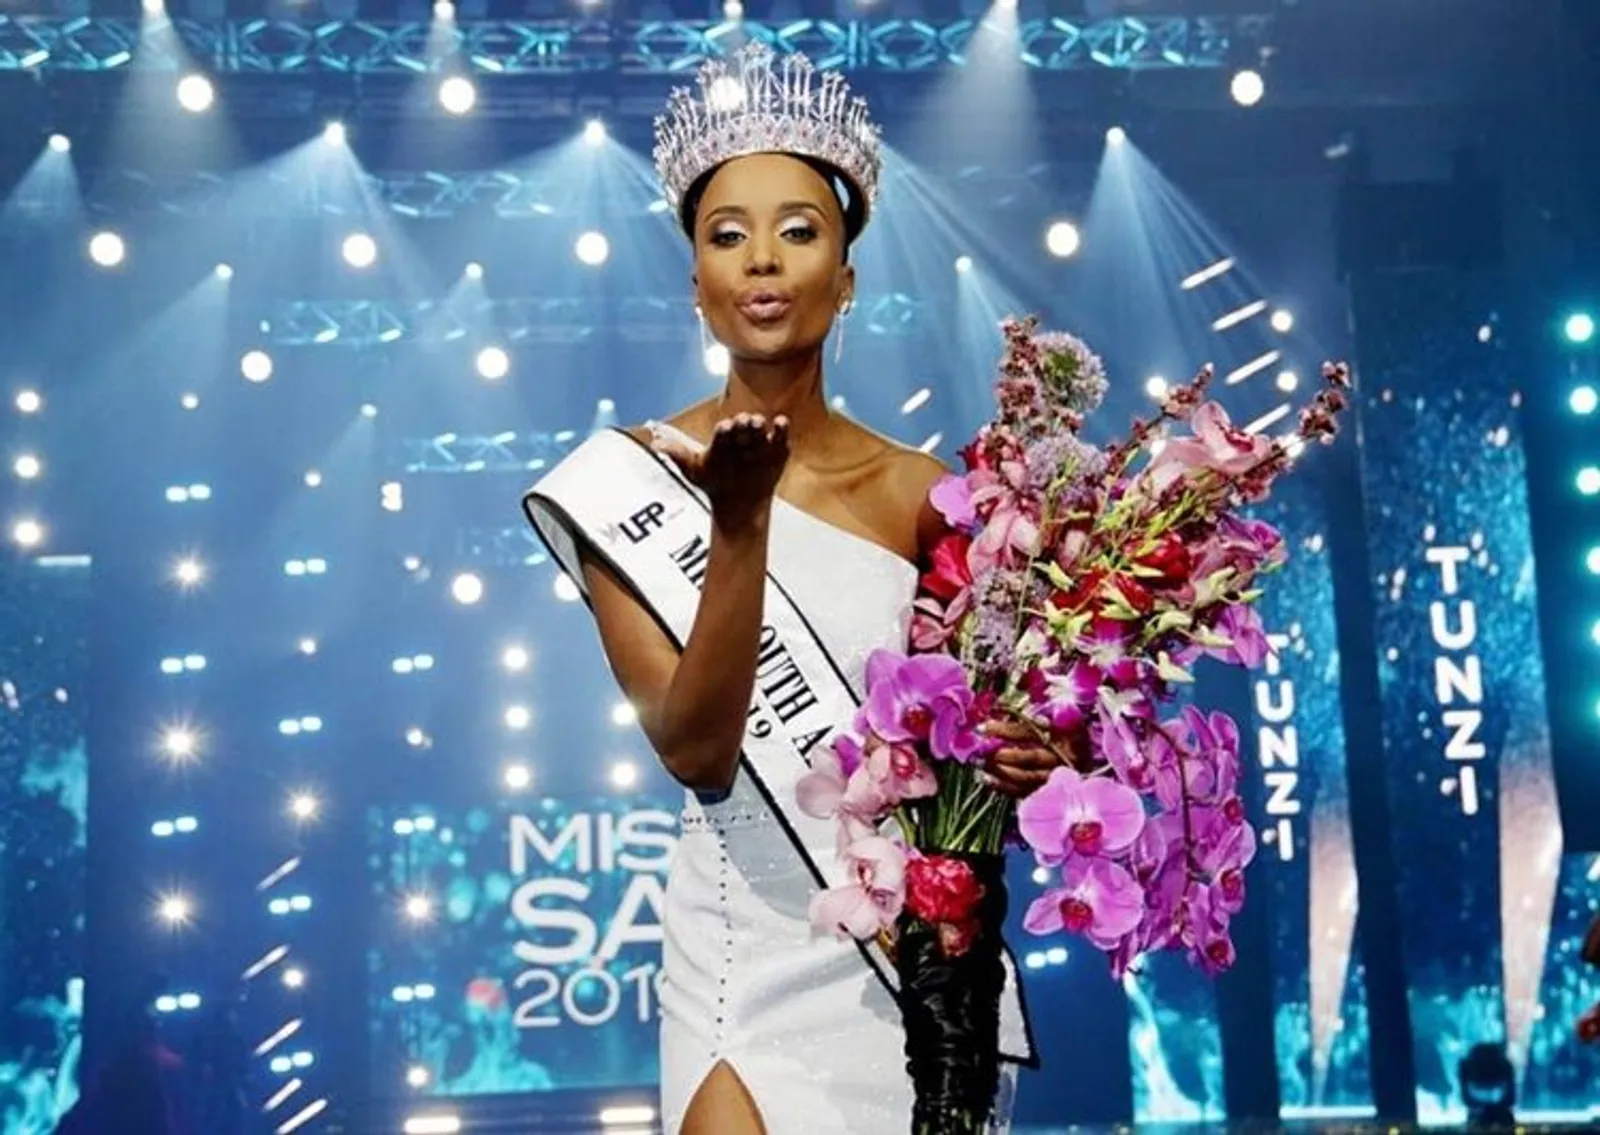 Patahkan Stereotip Kecantikan, Fakta Zozibini Tunzi Miss Universe 2019